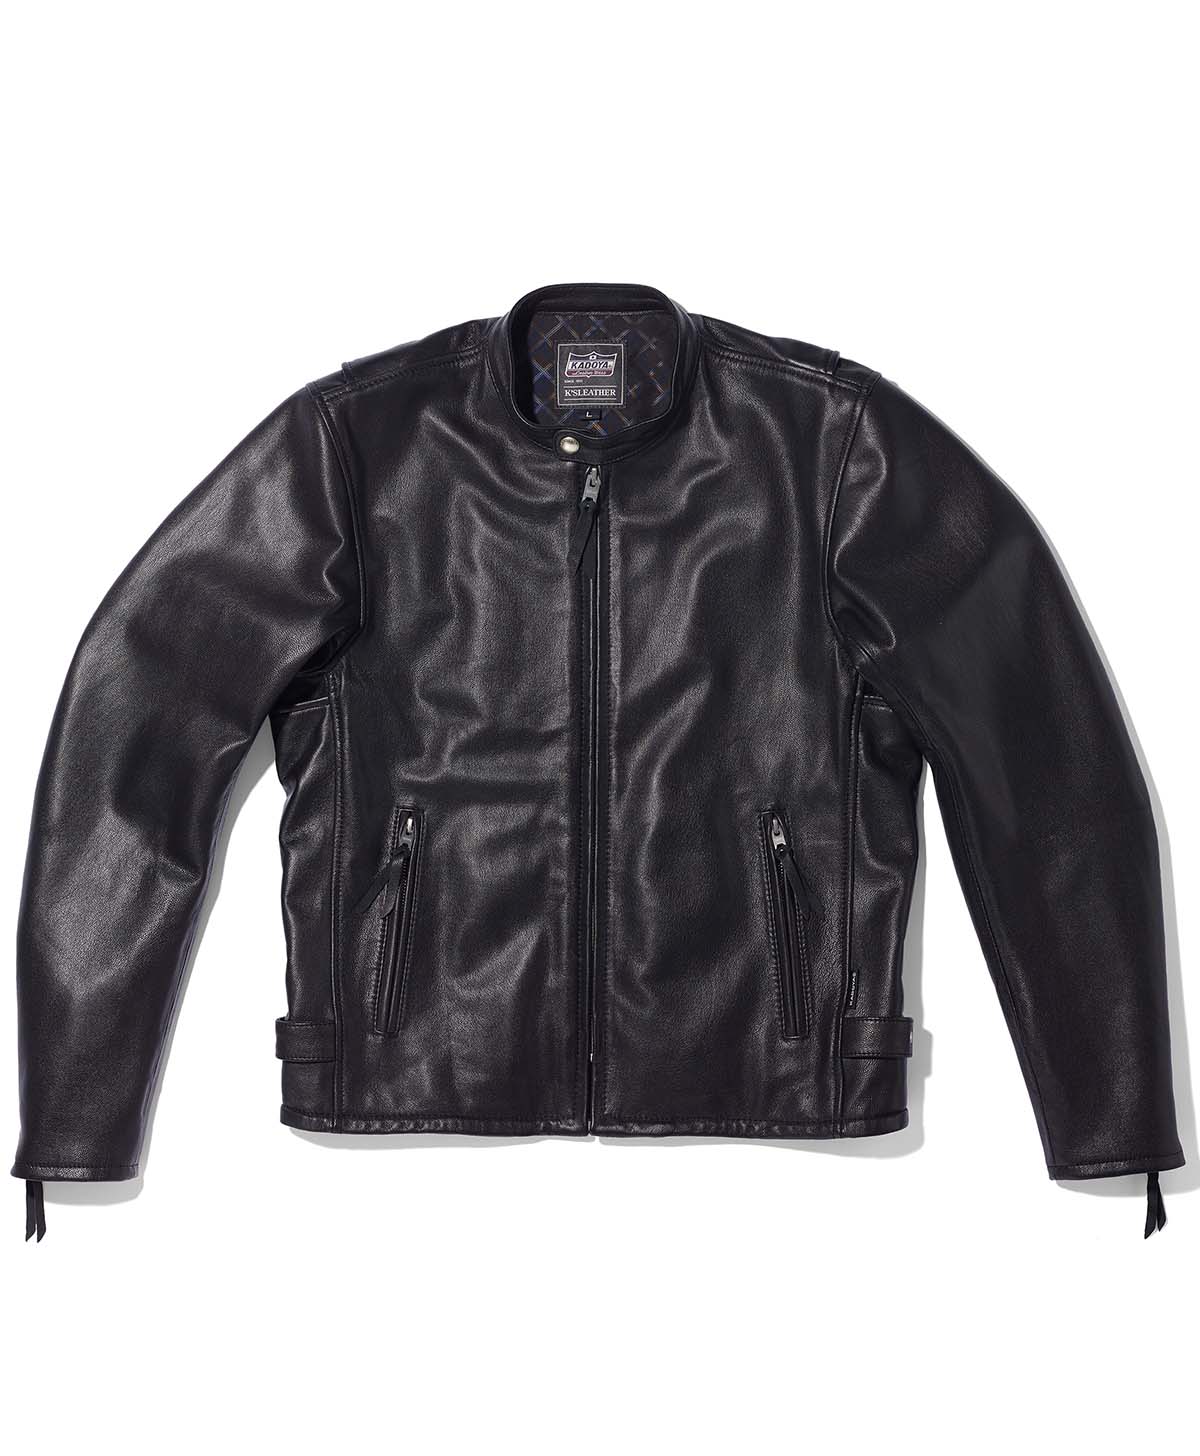 Leather jacket single leather jacket | Kadoya official online shop 